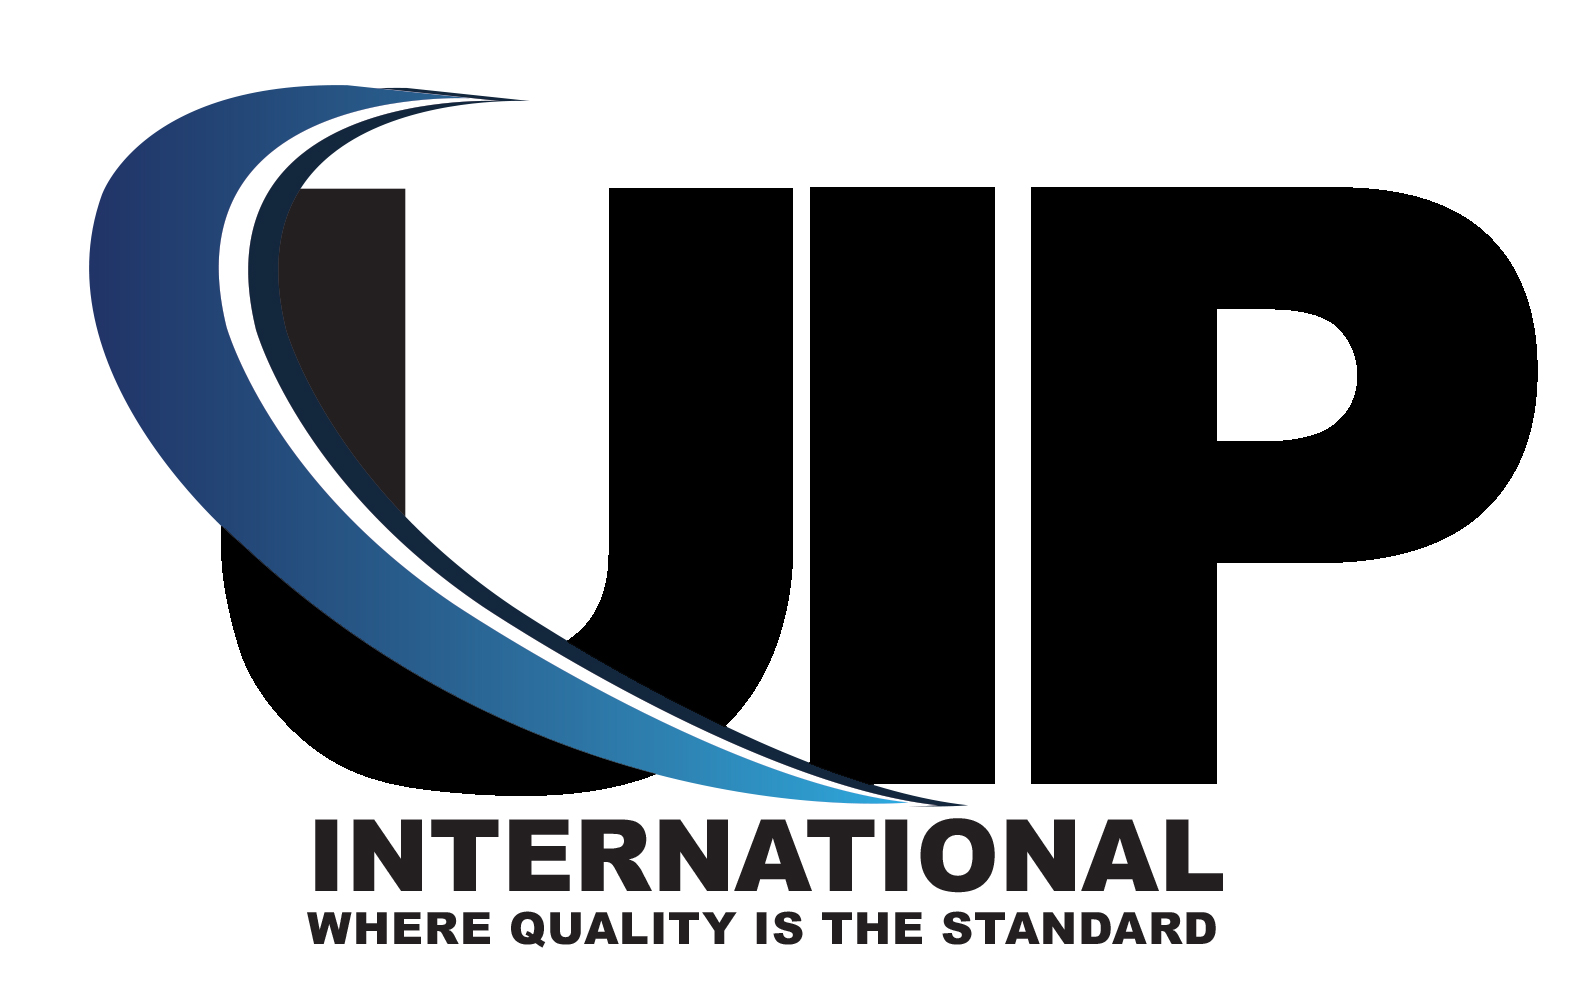 UIP International